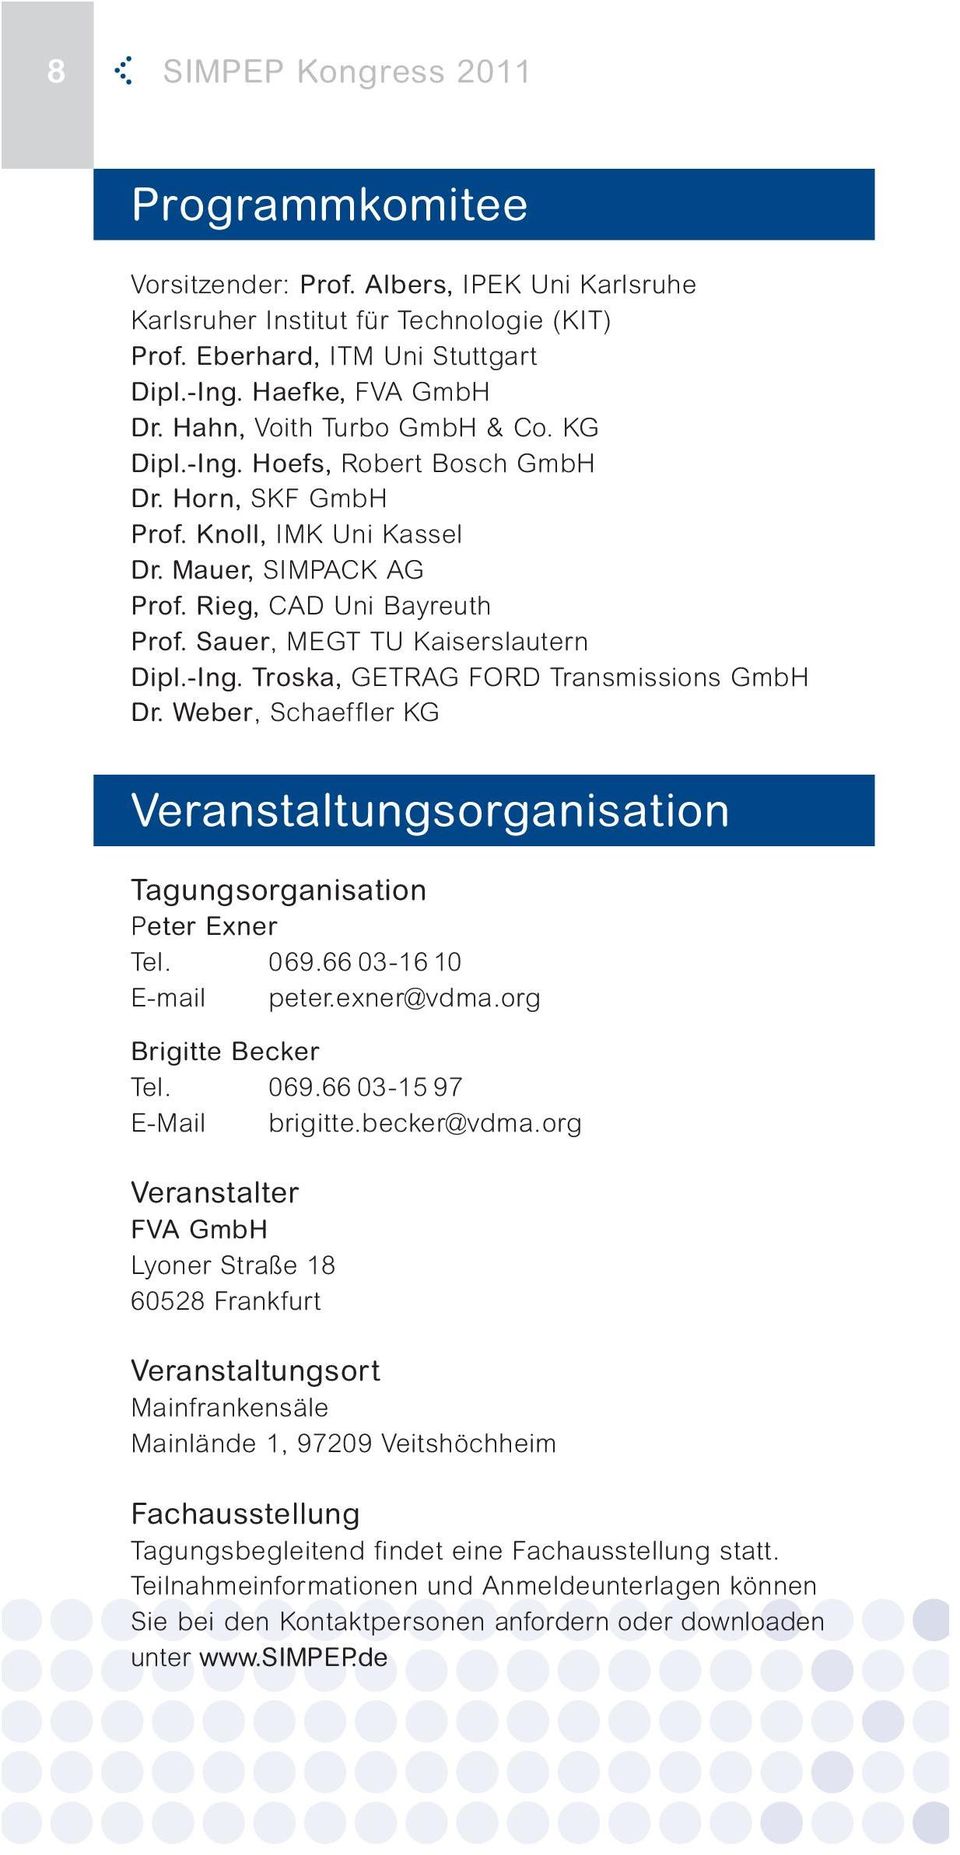 Sauer, MEGT TU Kaiserslautern Dipl.-Ing. Troska, GETRAG FORD Transmissions GmbH Dr. Weber, Schaeffler KG Veranstaltungsorganisation Tagungsorganisation Peter Exner Tel. 069.66 03-16 10 E-mail peter.